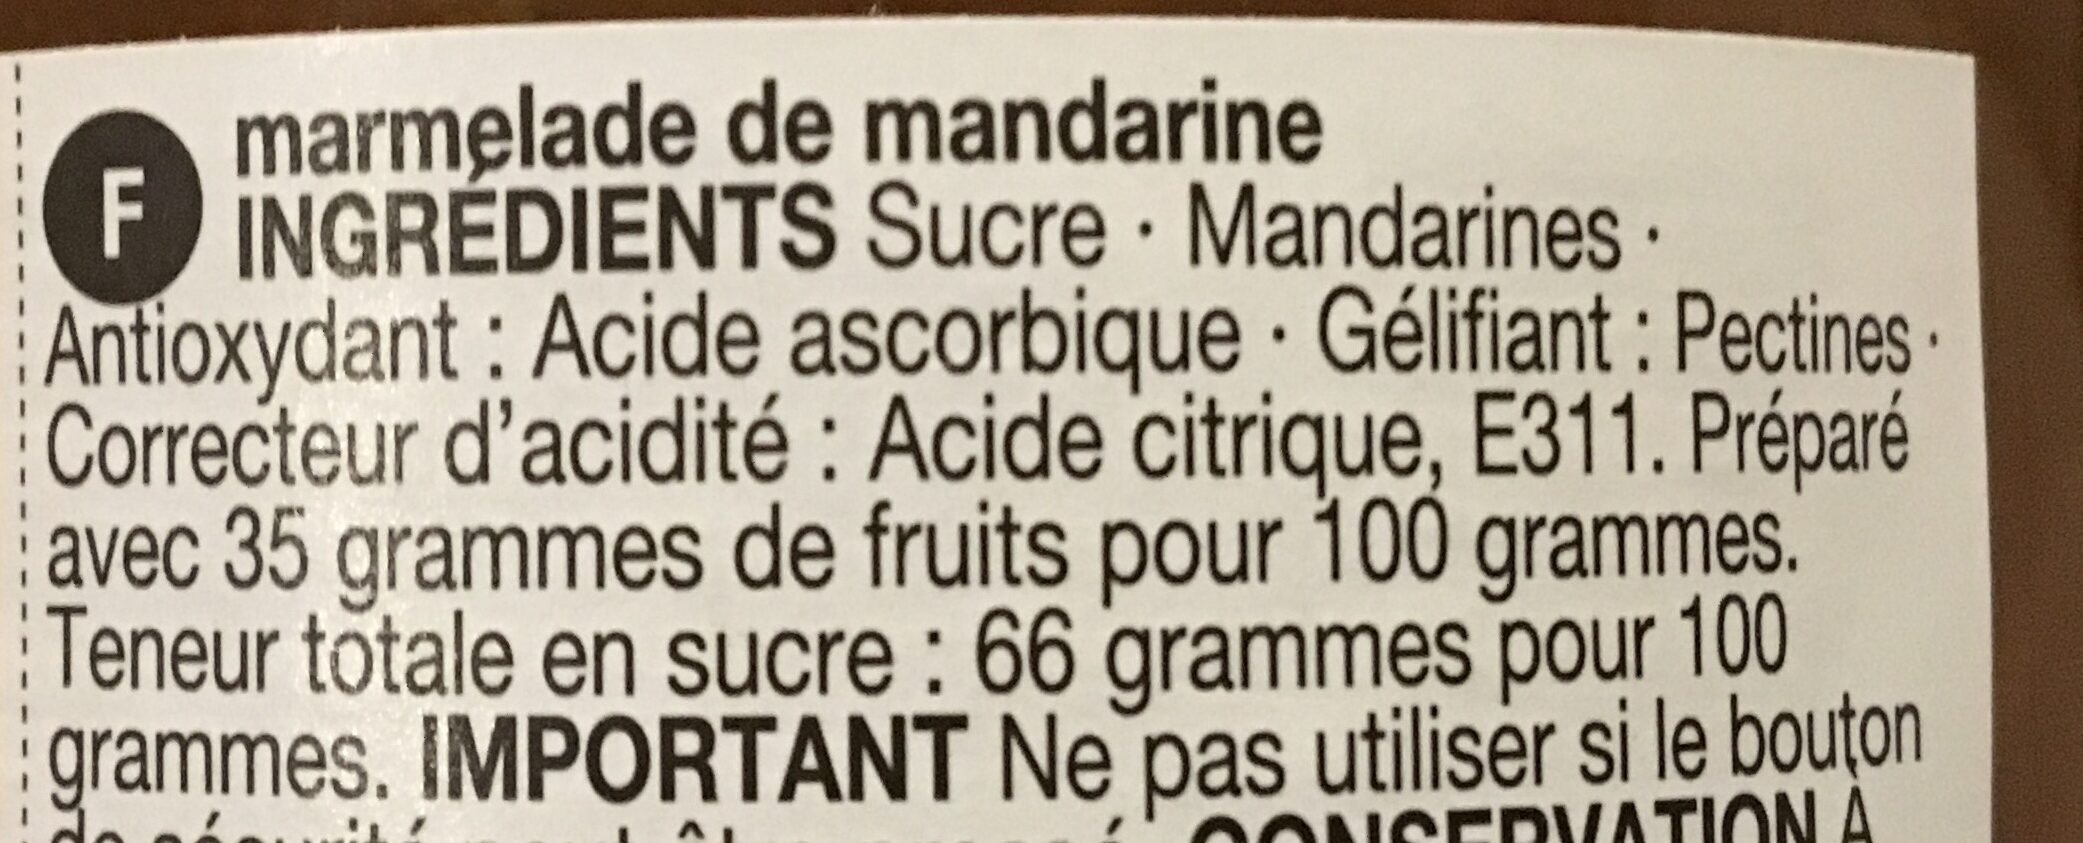 Confiture de mandarines - Ingredients - fr